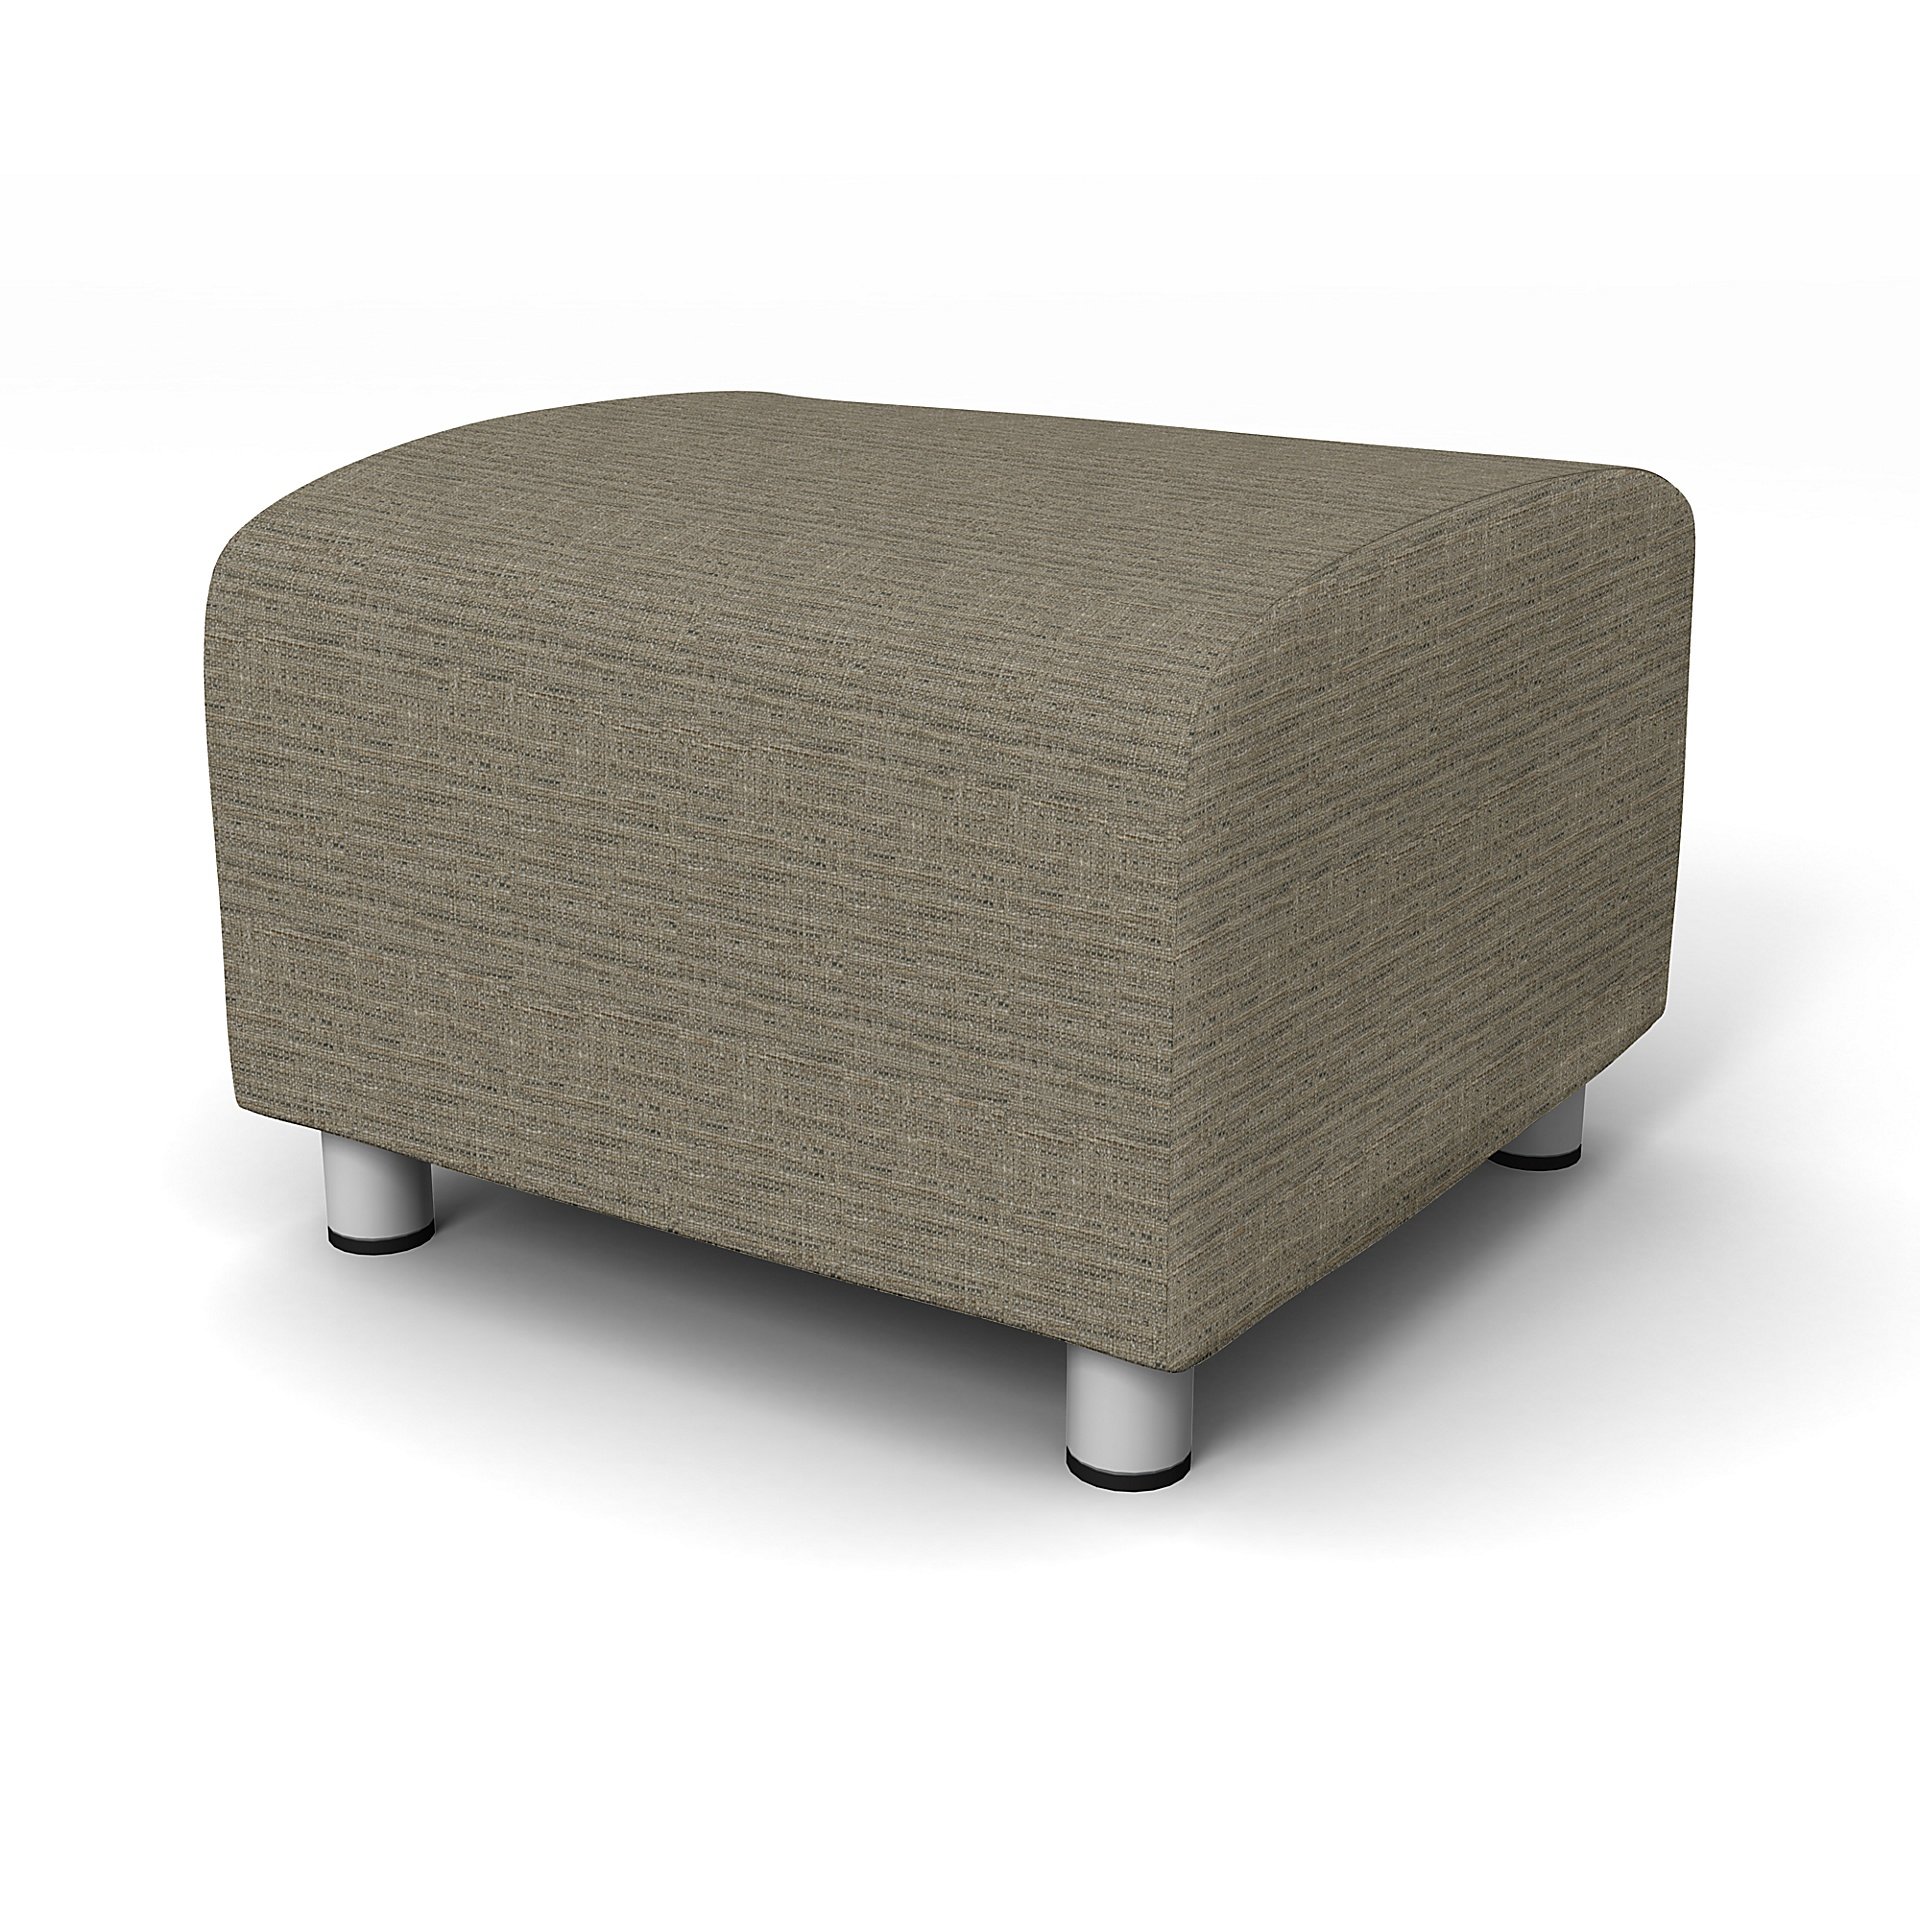 IKEA - Klippan Footstool Cover, Mole Brown, Boucle & Texture - Bemz